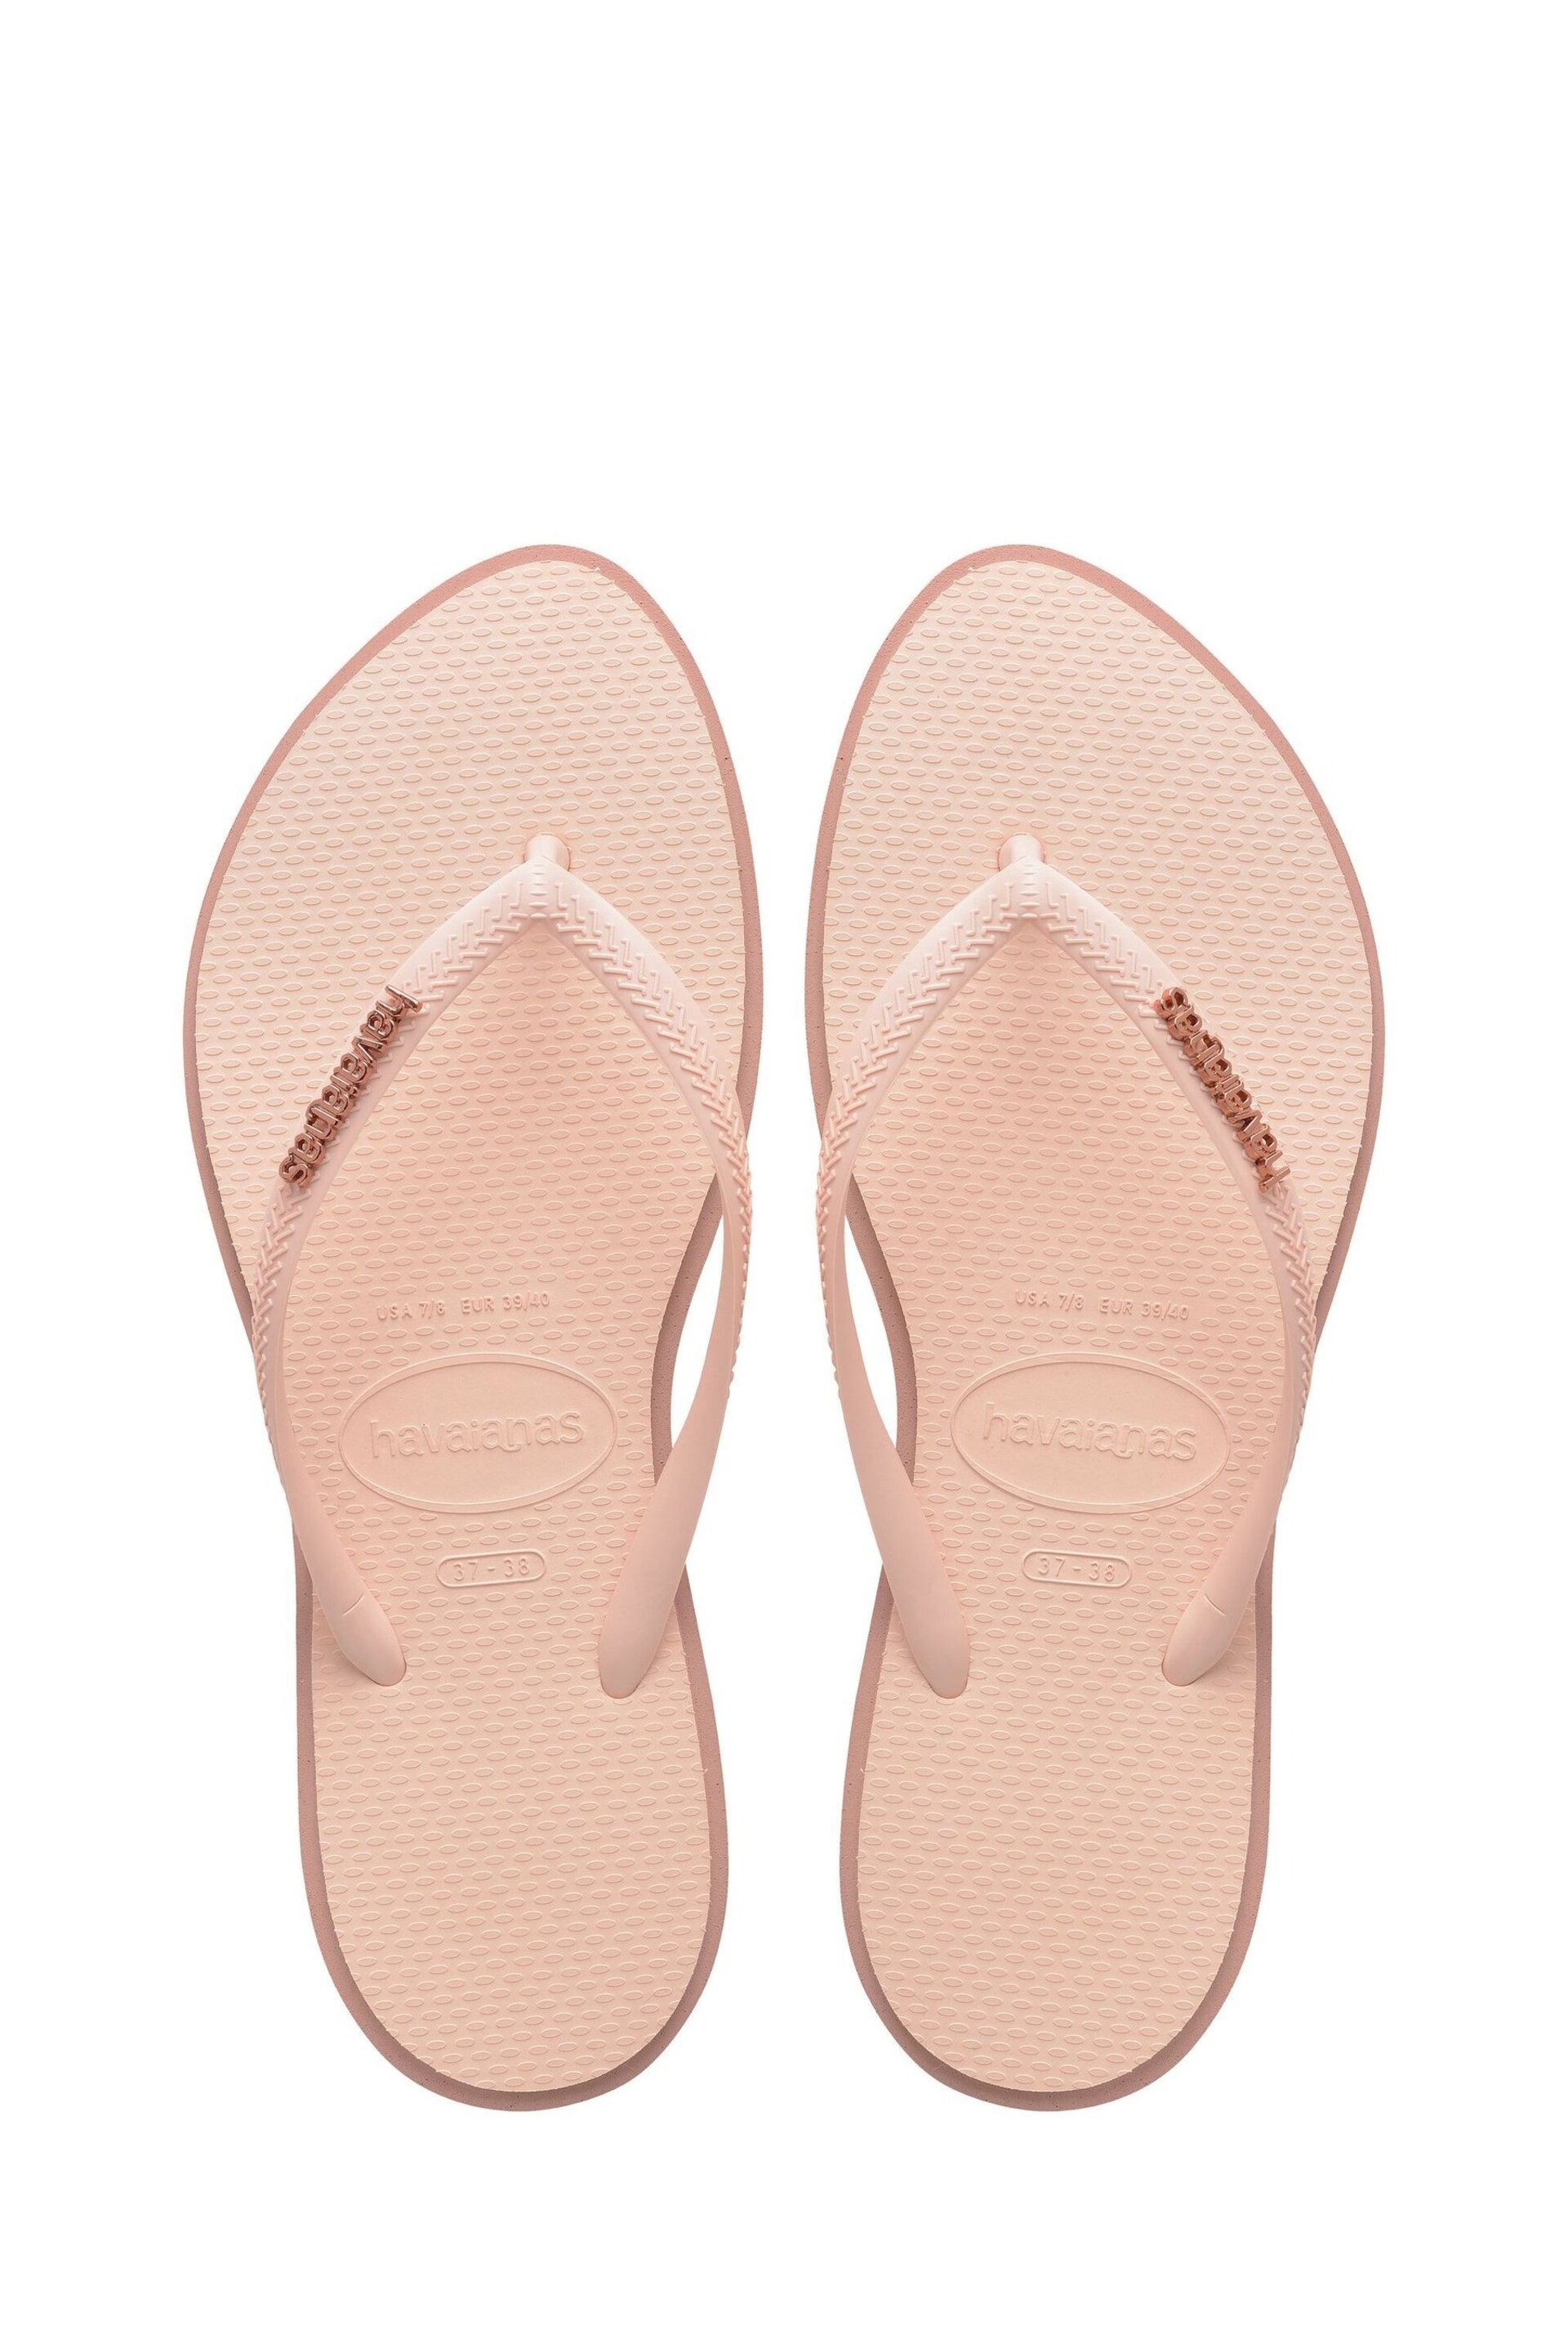 Havaianas Slim Pink Point Flip Flops - Image 4 of 6